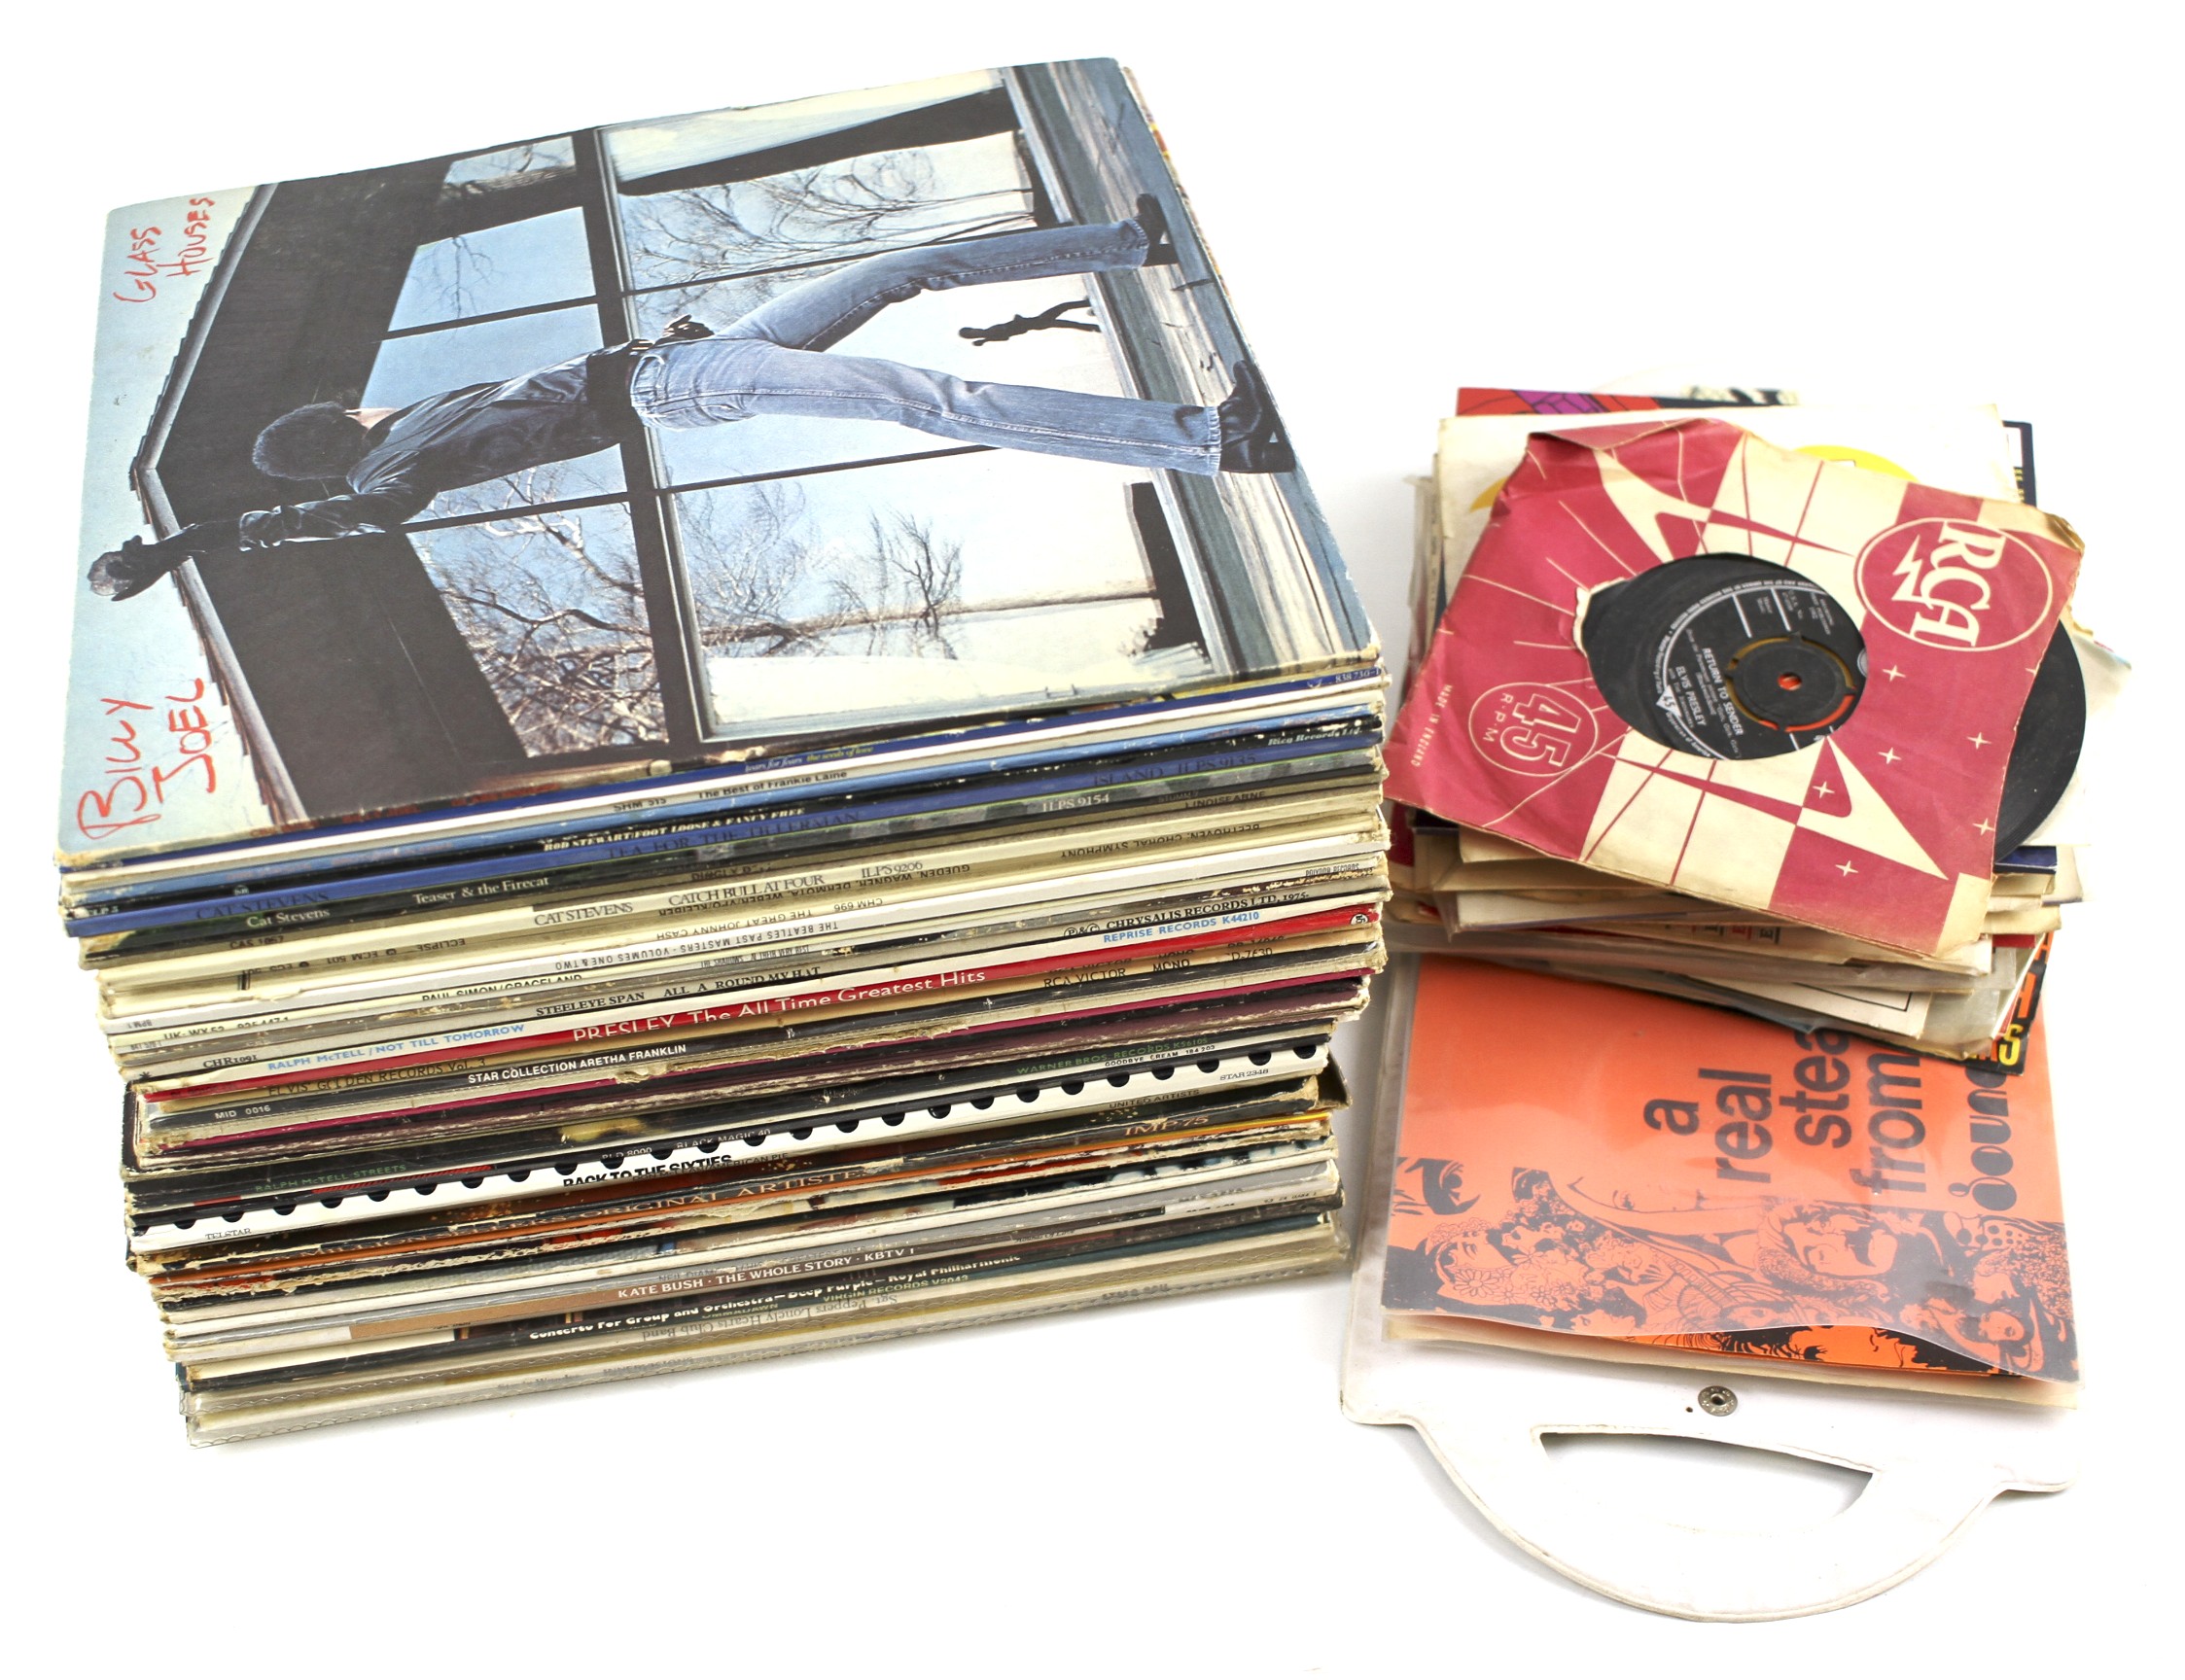 A large collection of vinyl. Including Elvis Presley, Sgt.